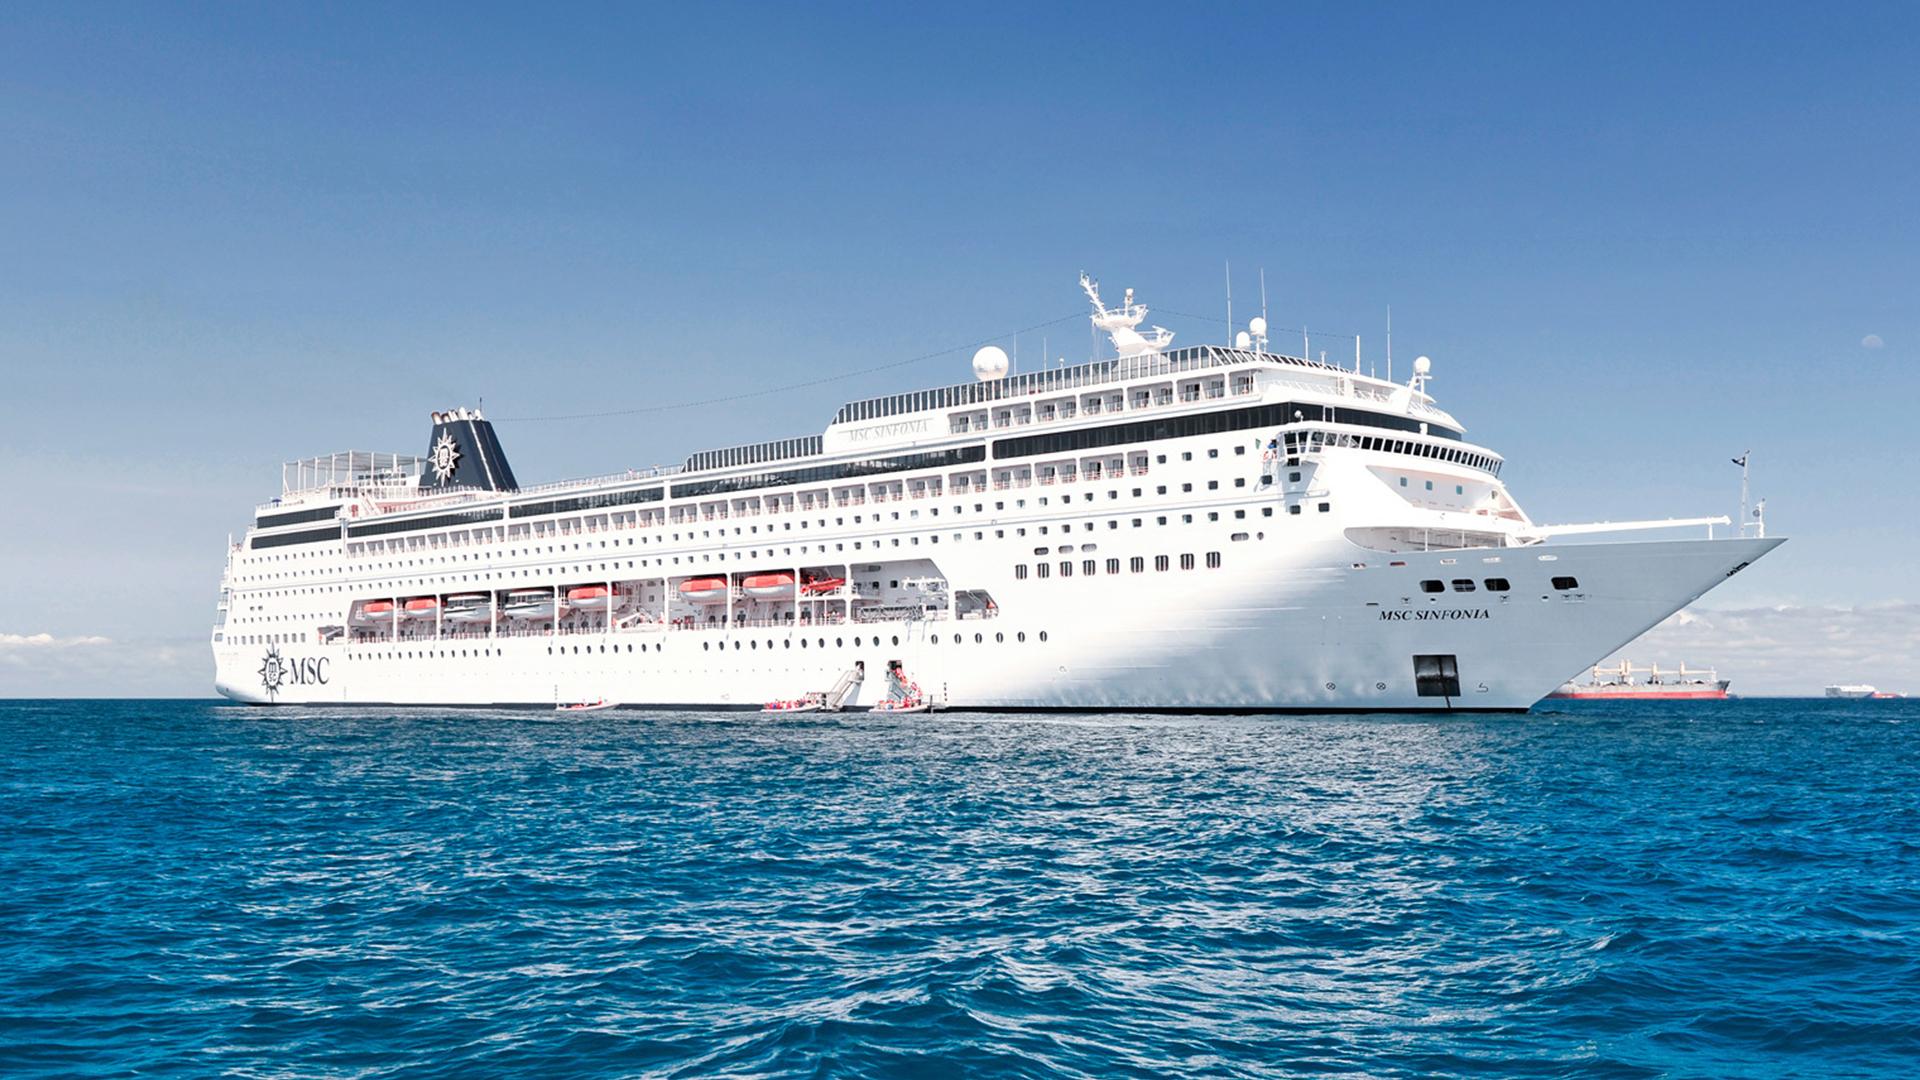 cruise prices mediterranean